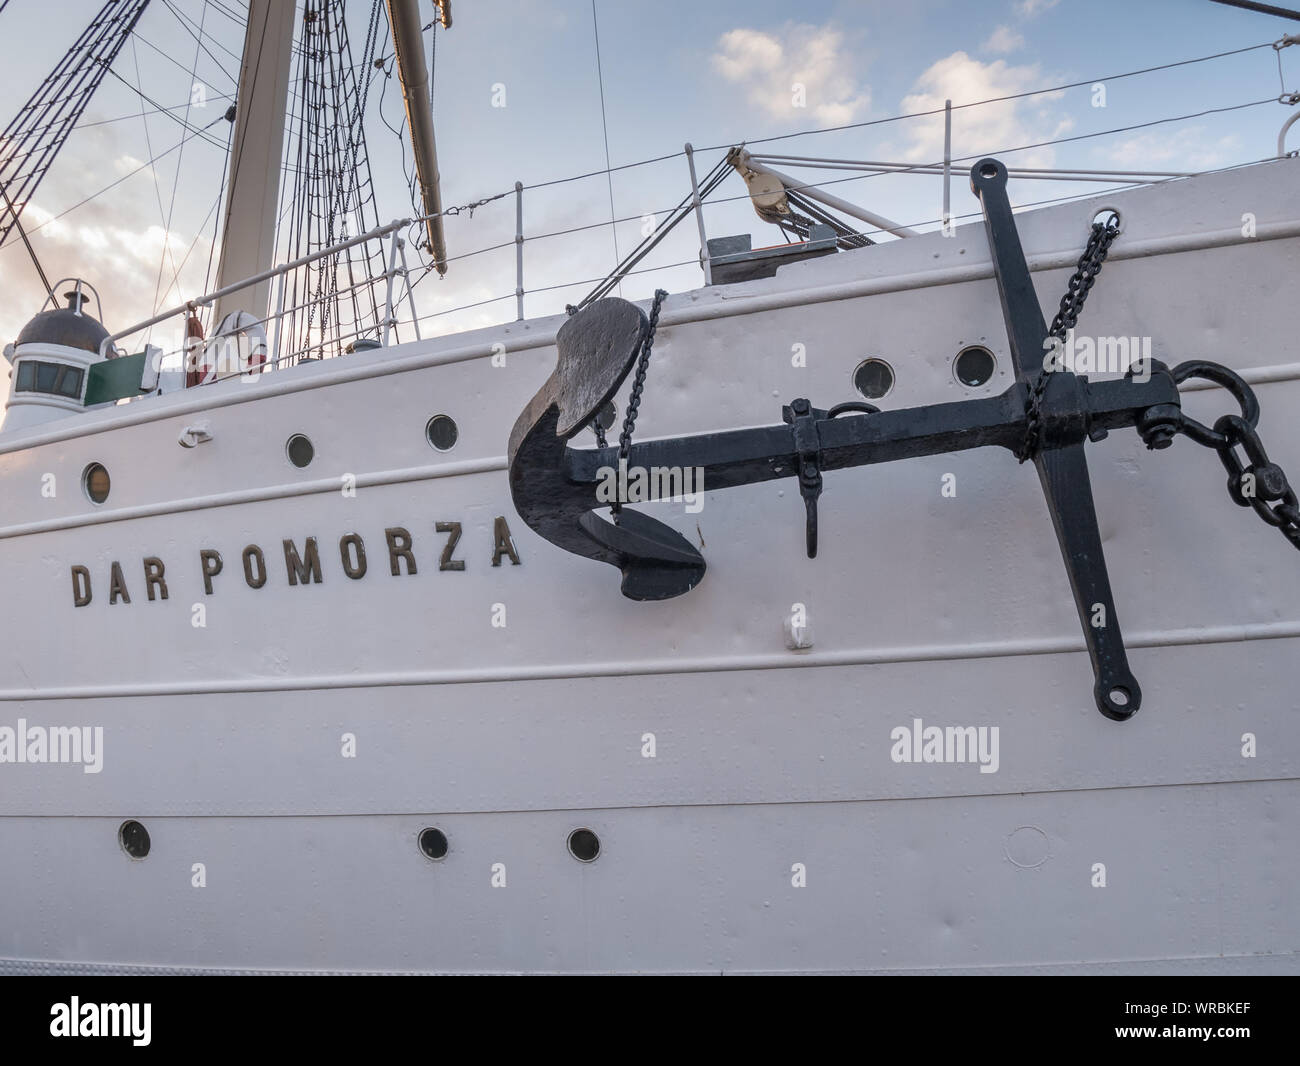 Dar Pomorza, d'ancrage (don de Poméranie) Tall Ship, Gdynia, Pologne Banque D'Images